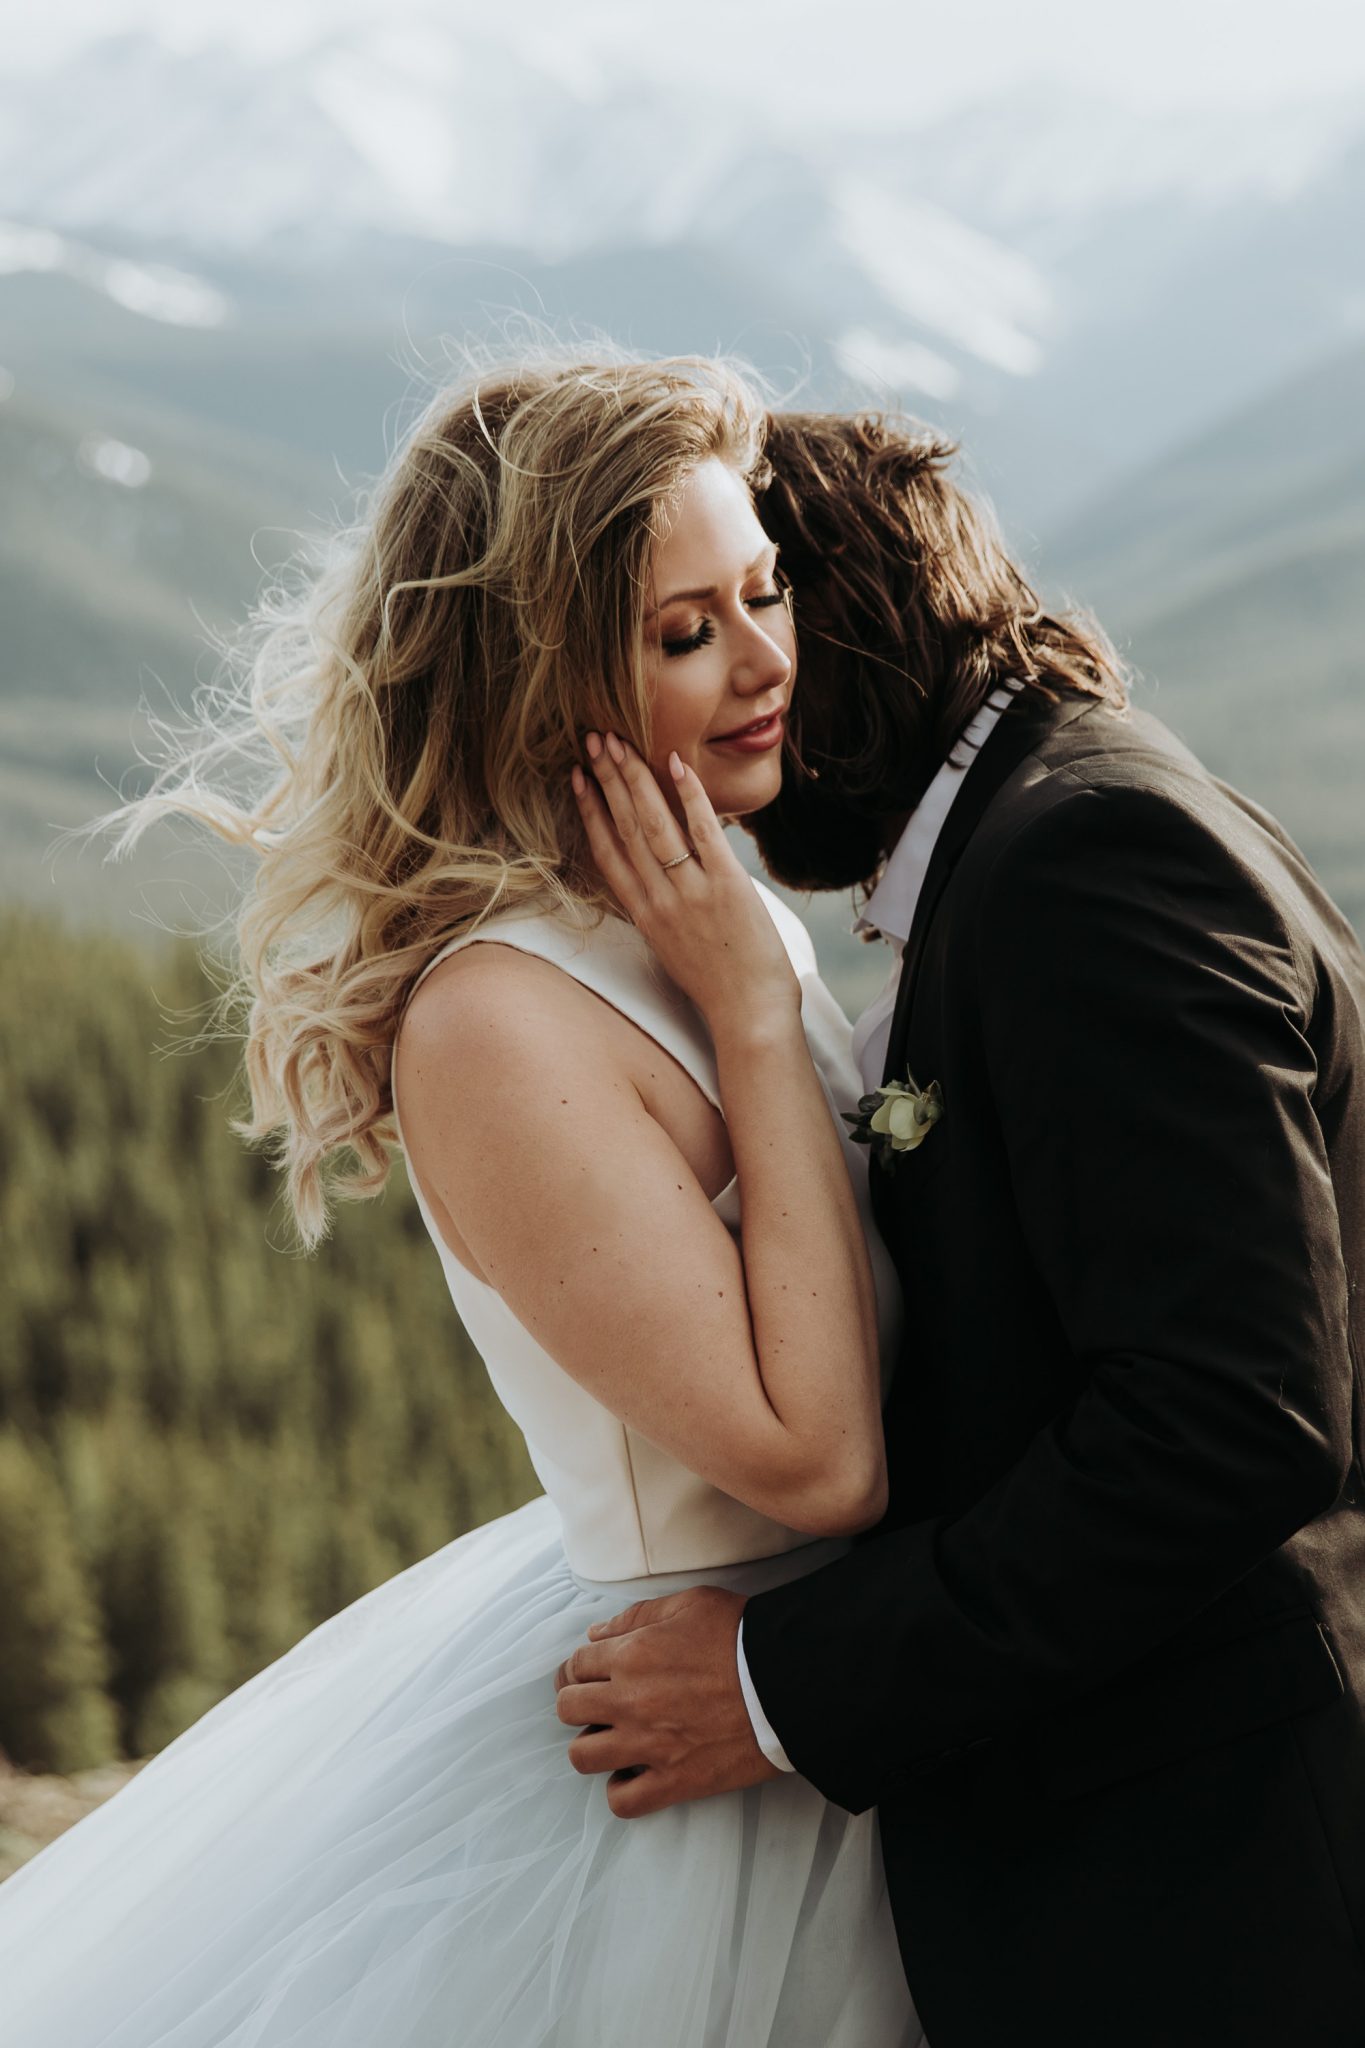 Romantic Bridal Hair Mountainous Adventure Session featuring Contemporary Attire & Alberta Views Featured on Bronte Bridë